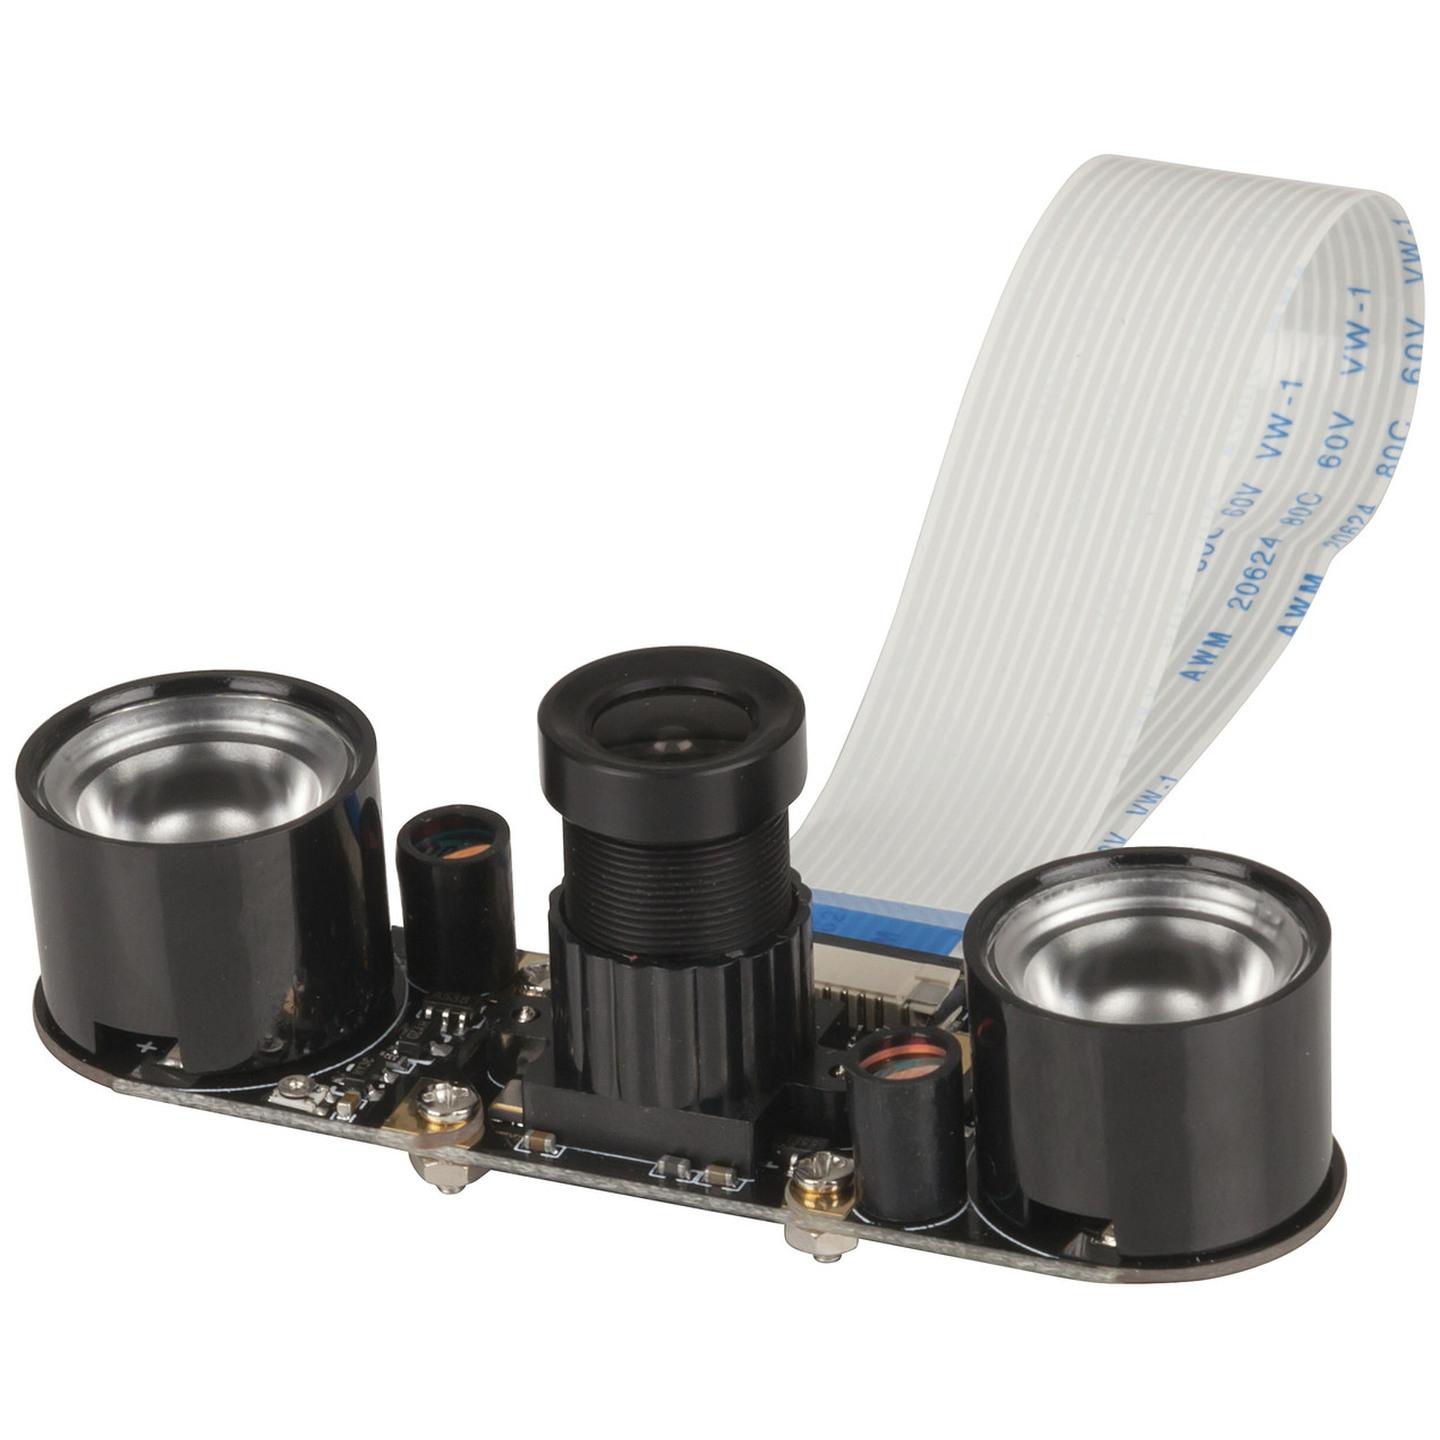 5MP Night Vision Camera - for Raspberry Pi